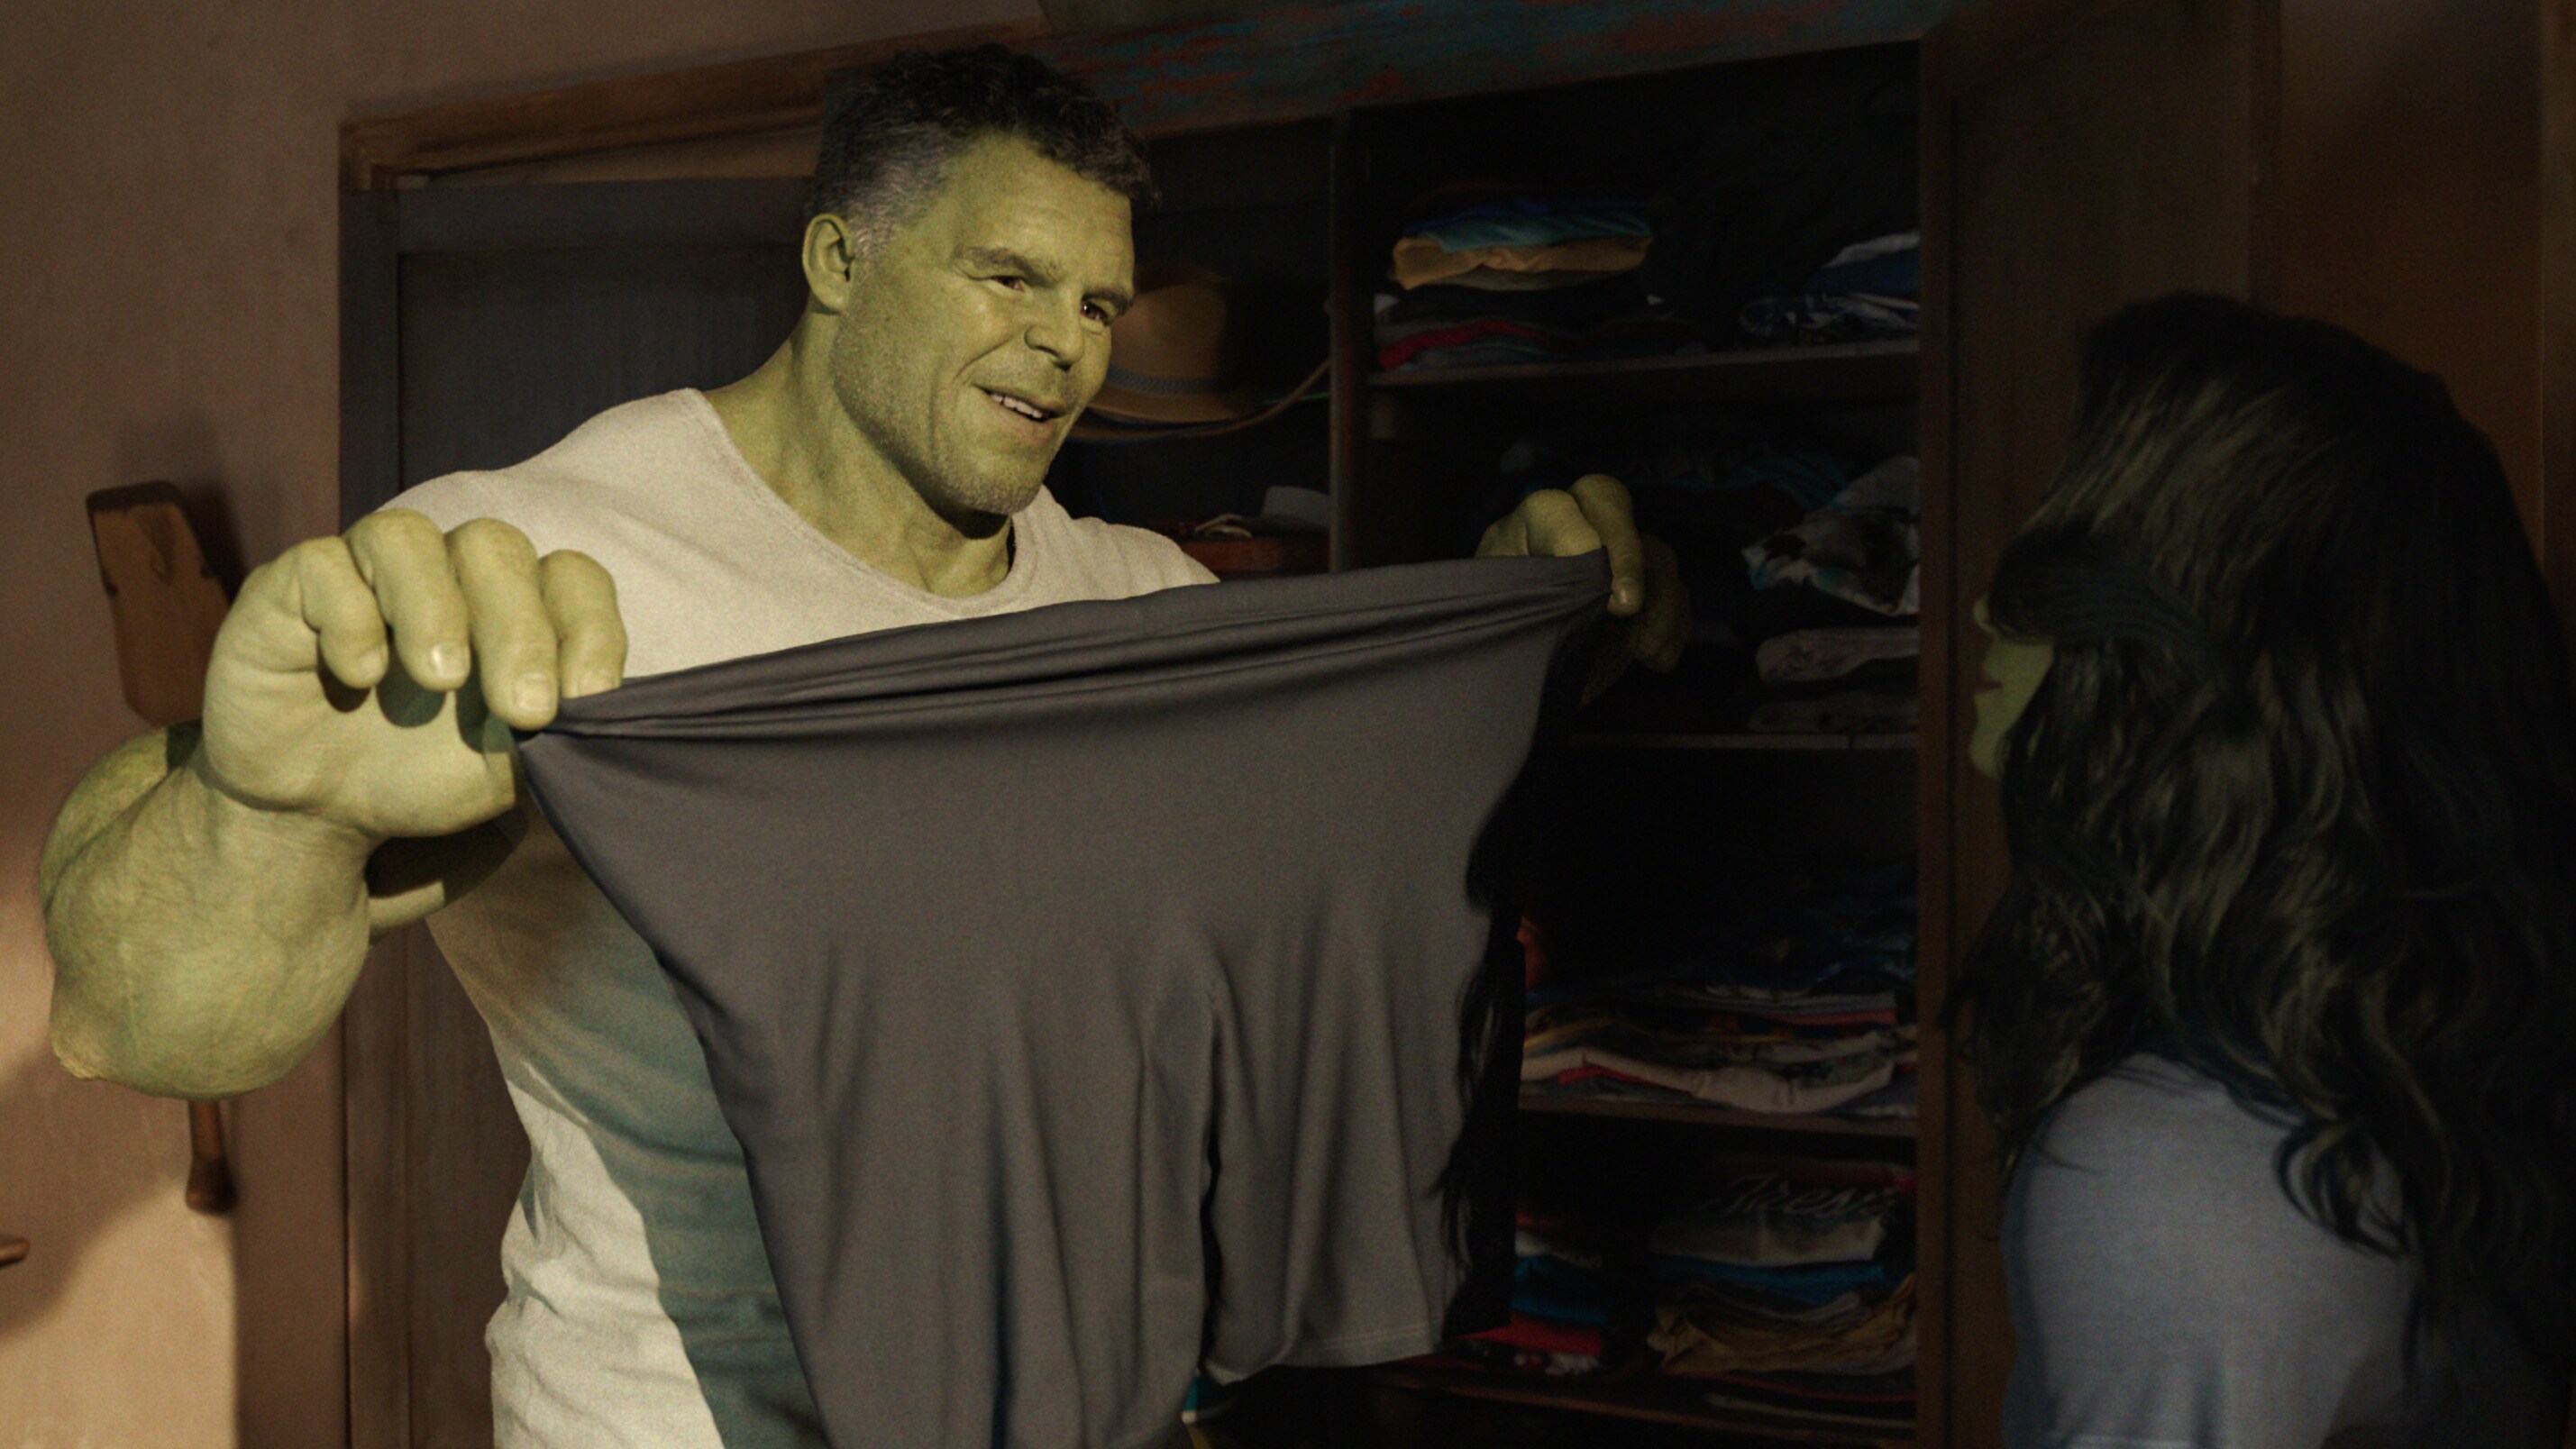 Hulk putting on t-shirt.